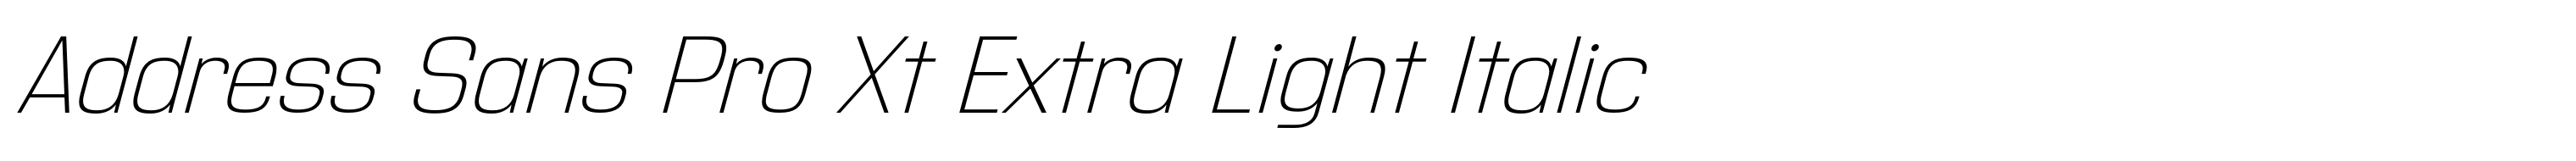 Address Sans Pro Xt Extra Light Italic